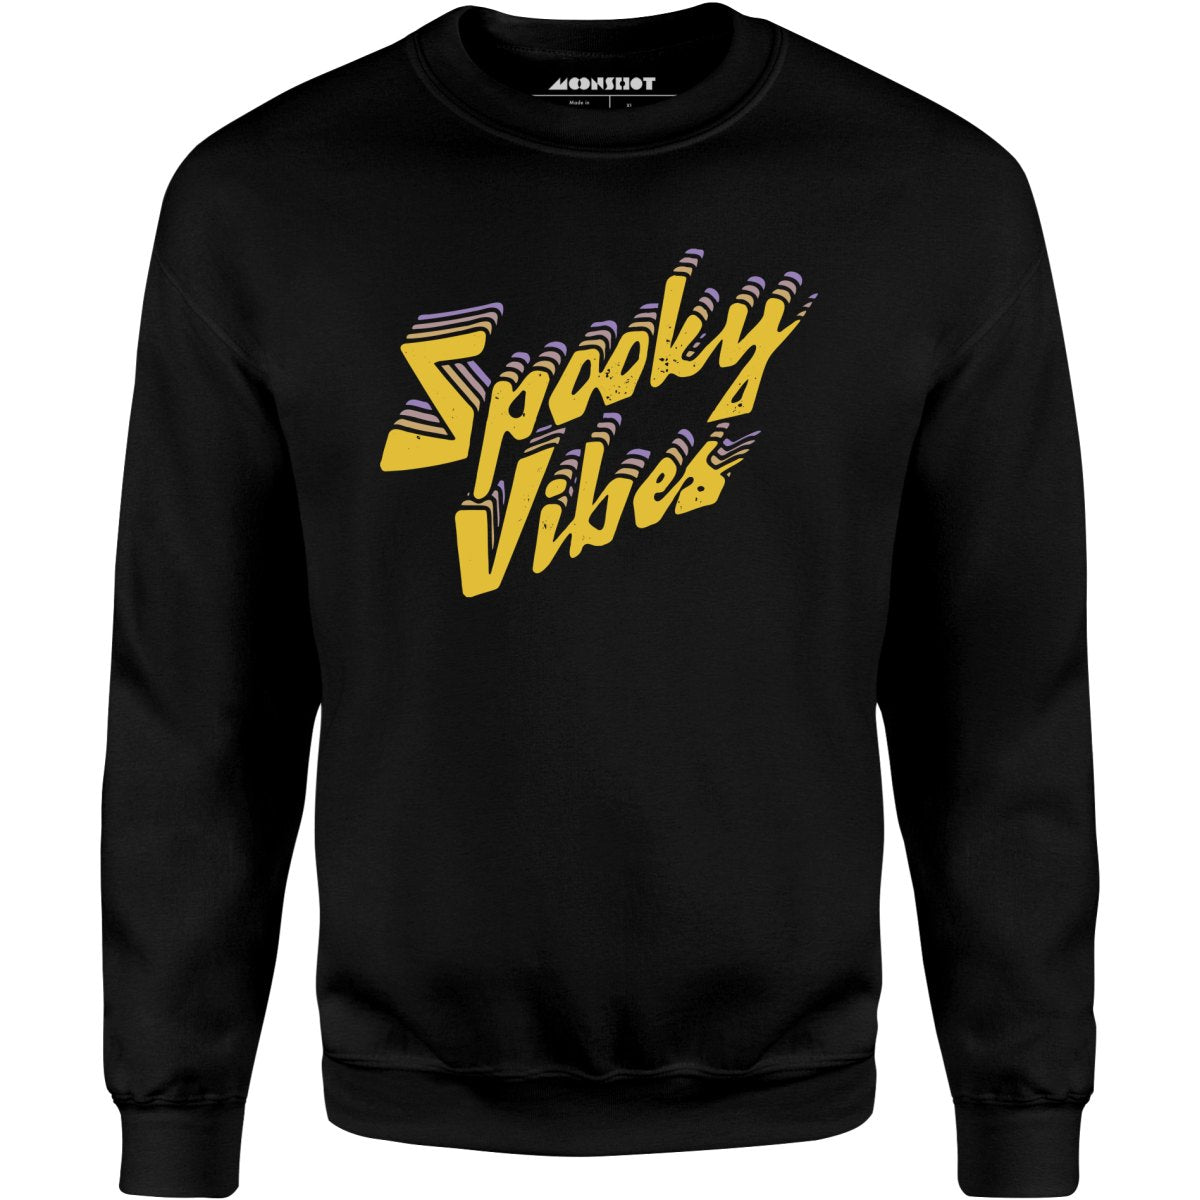 Spooky Vibes - Unisex Sweatshirt